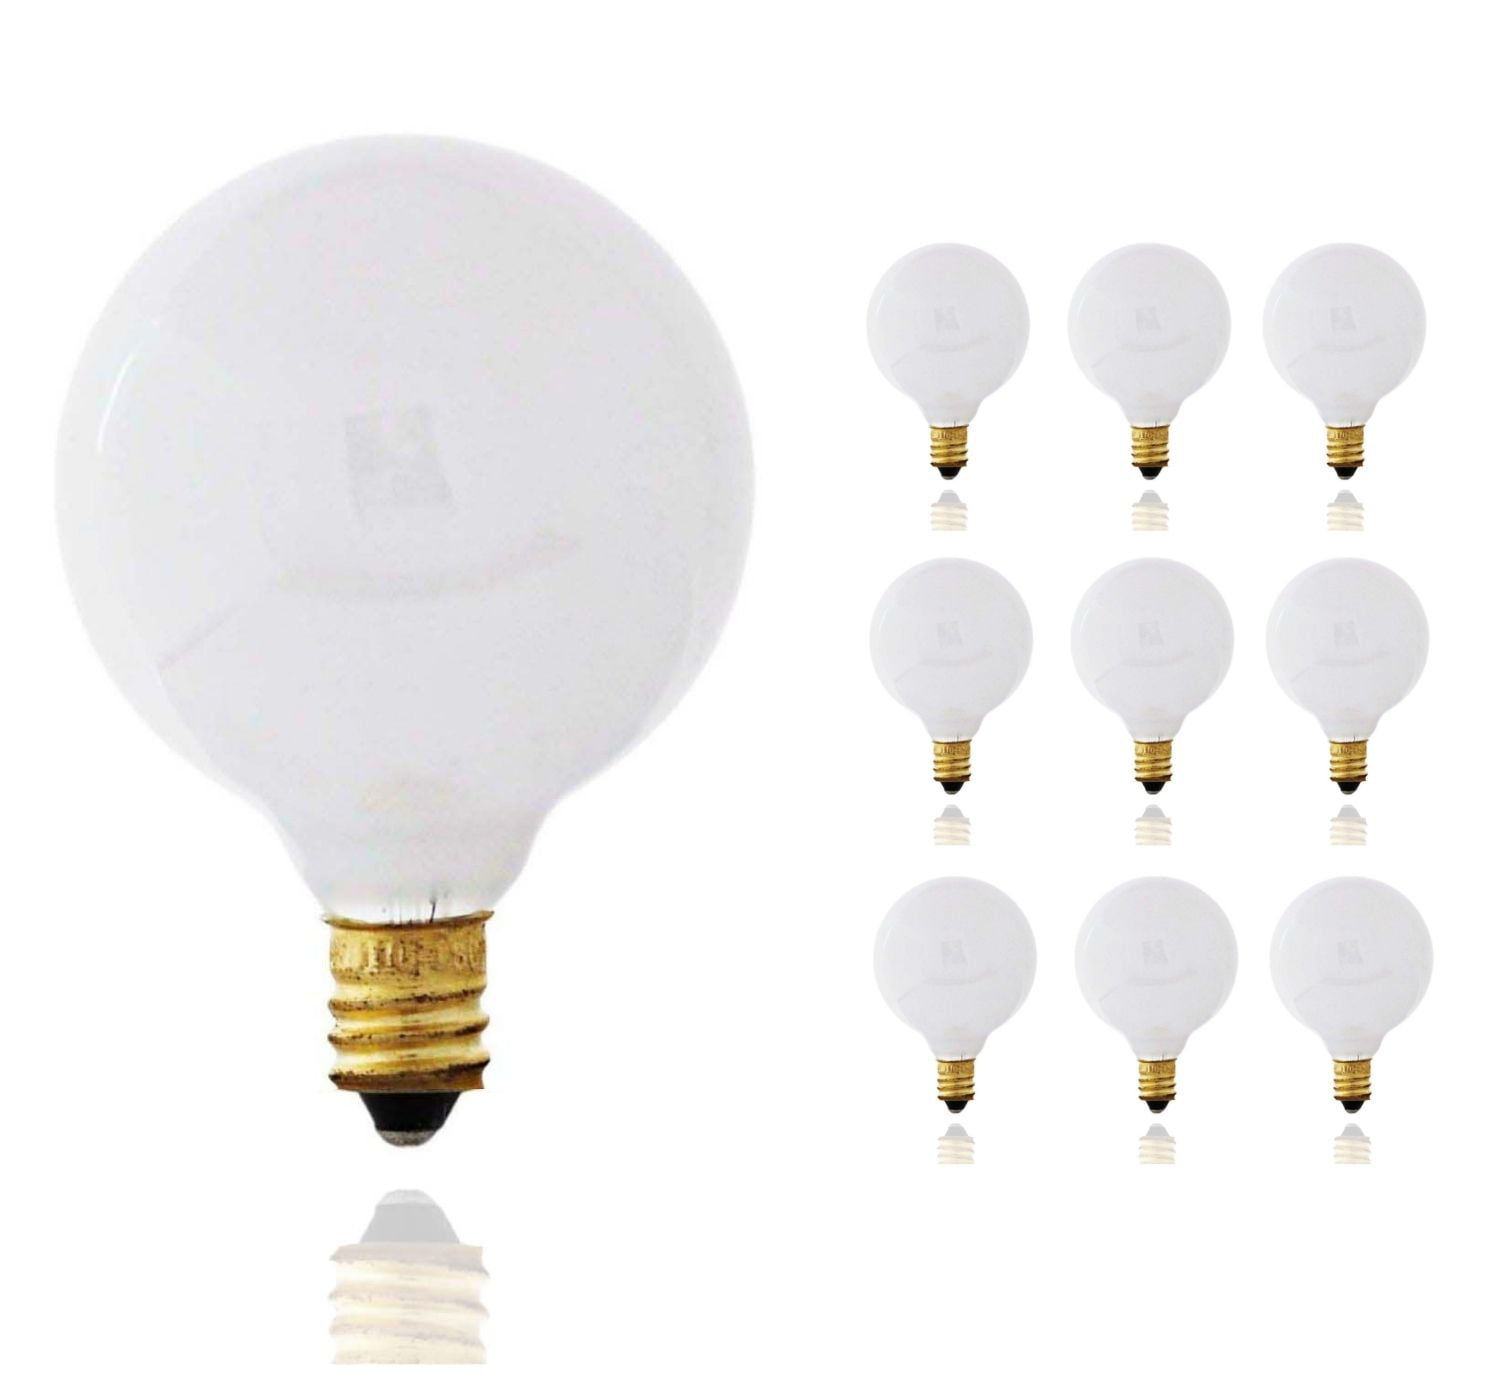 Sylvania E12 Candelabra Base Light Bulb 25 Watts G16.5 Globe Warm White 10 Pack